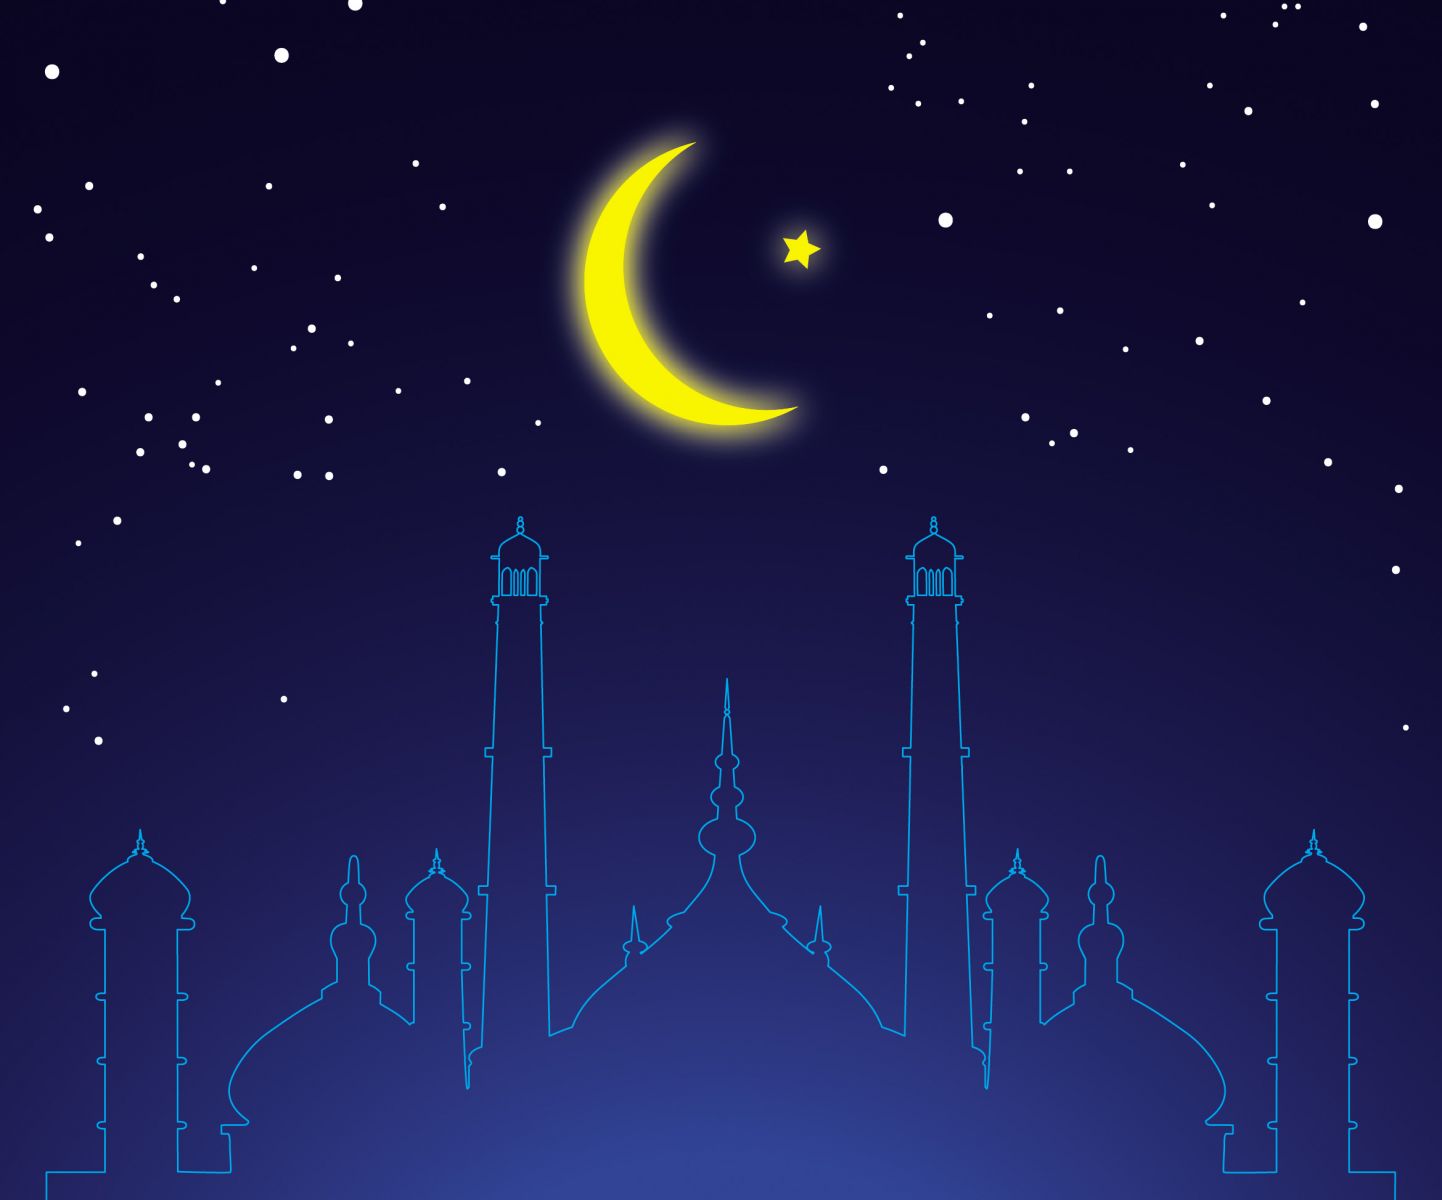 Mobitel offers unbeatable IDD Call rates for the festive Ramadan season ...